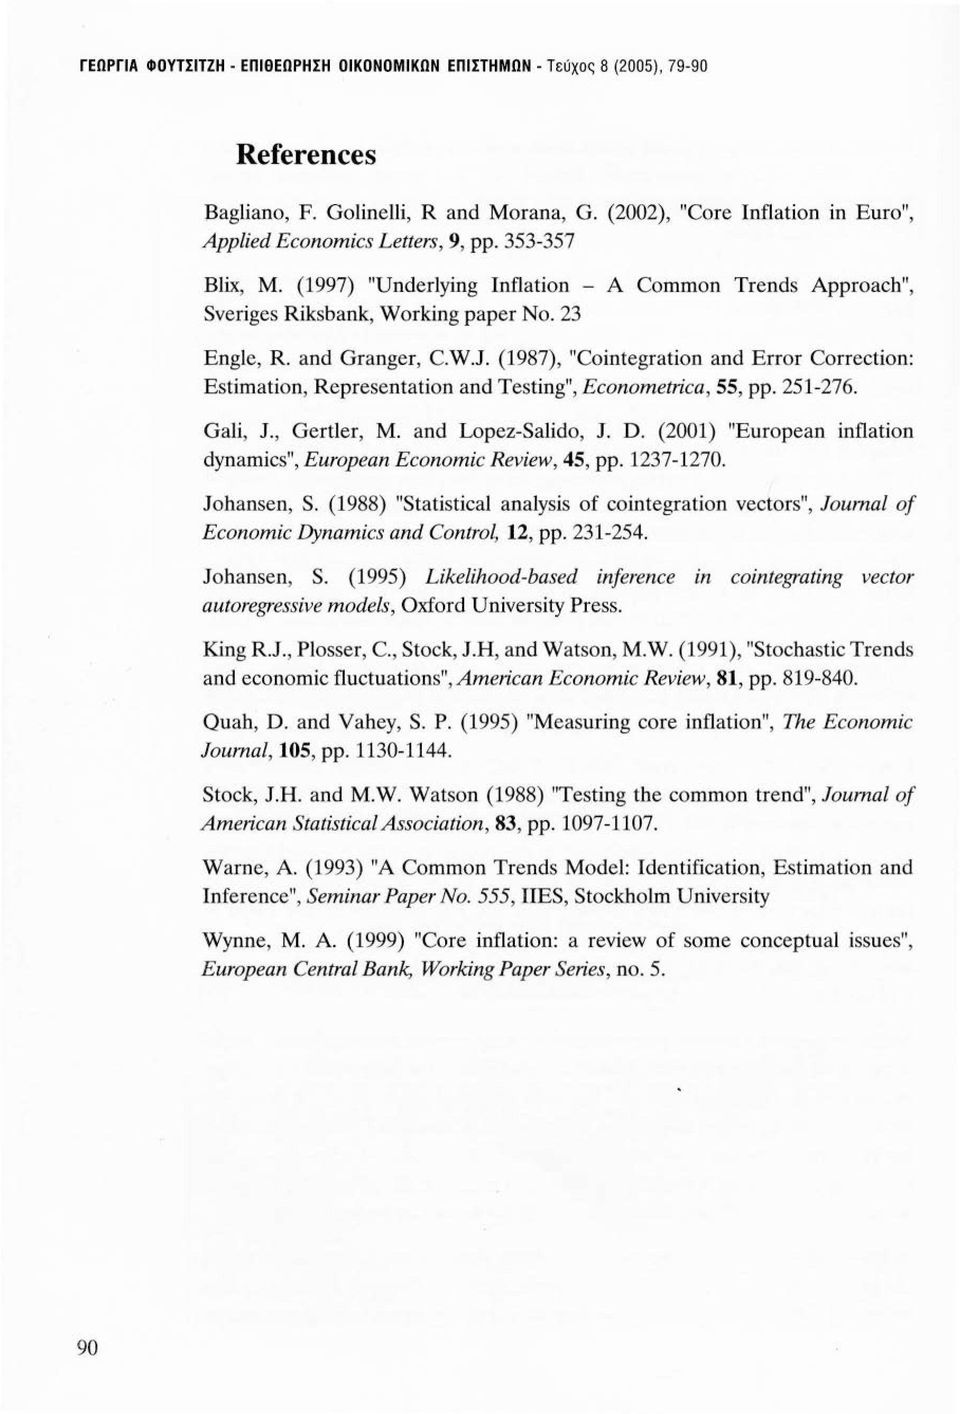 (1987), "Cointegration and Error Correction: Estimation, Representation and Testing", Econometrica, 55, pp. 251-276. Gali, J., Gertler, Μ. and Lopez-Salido, J. D.